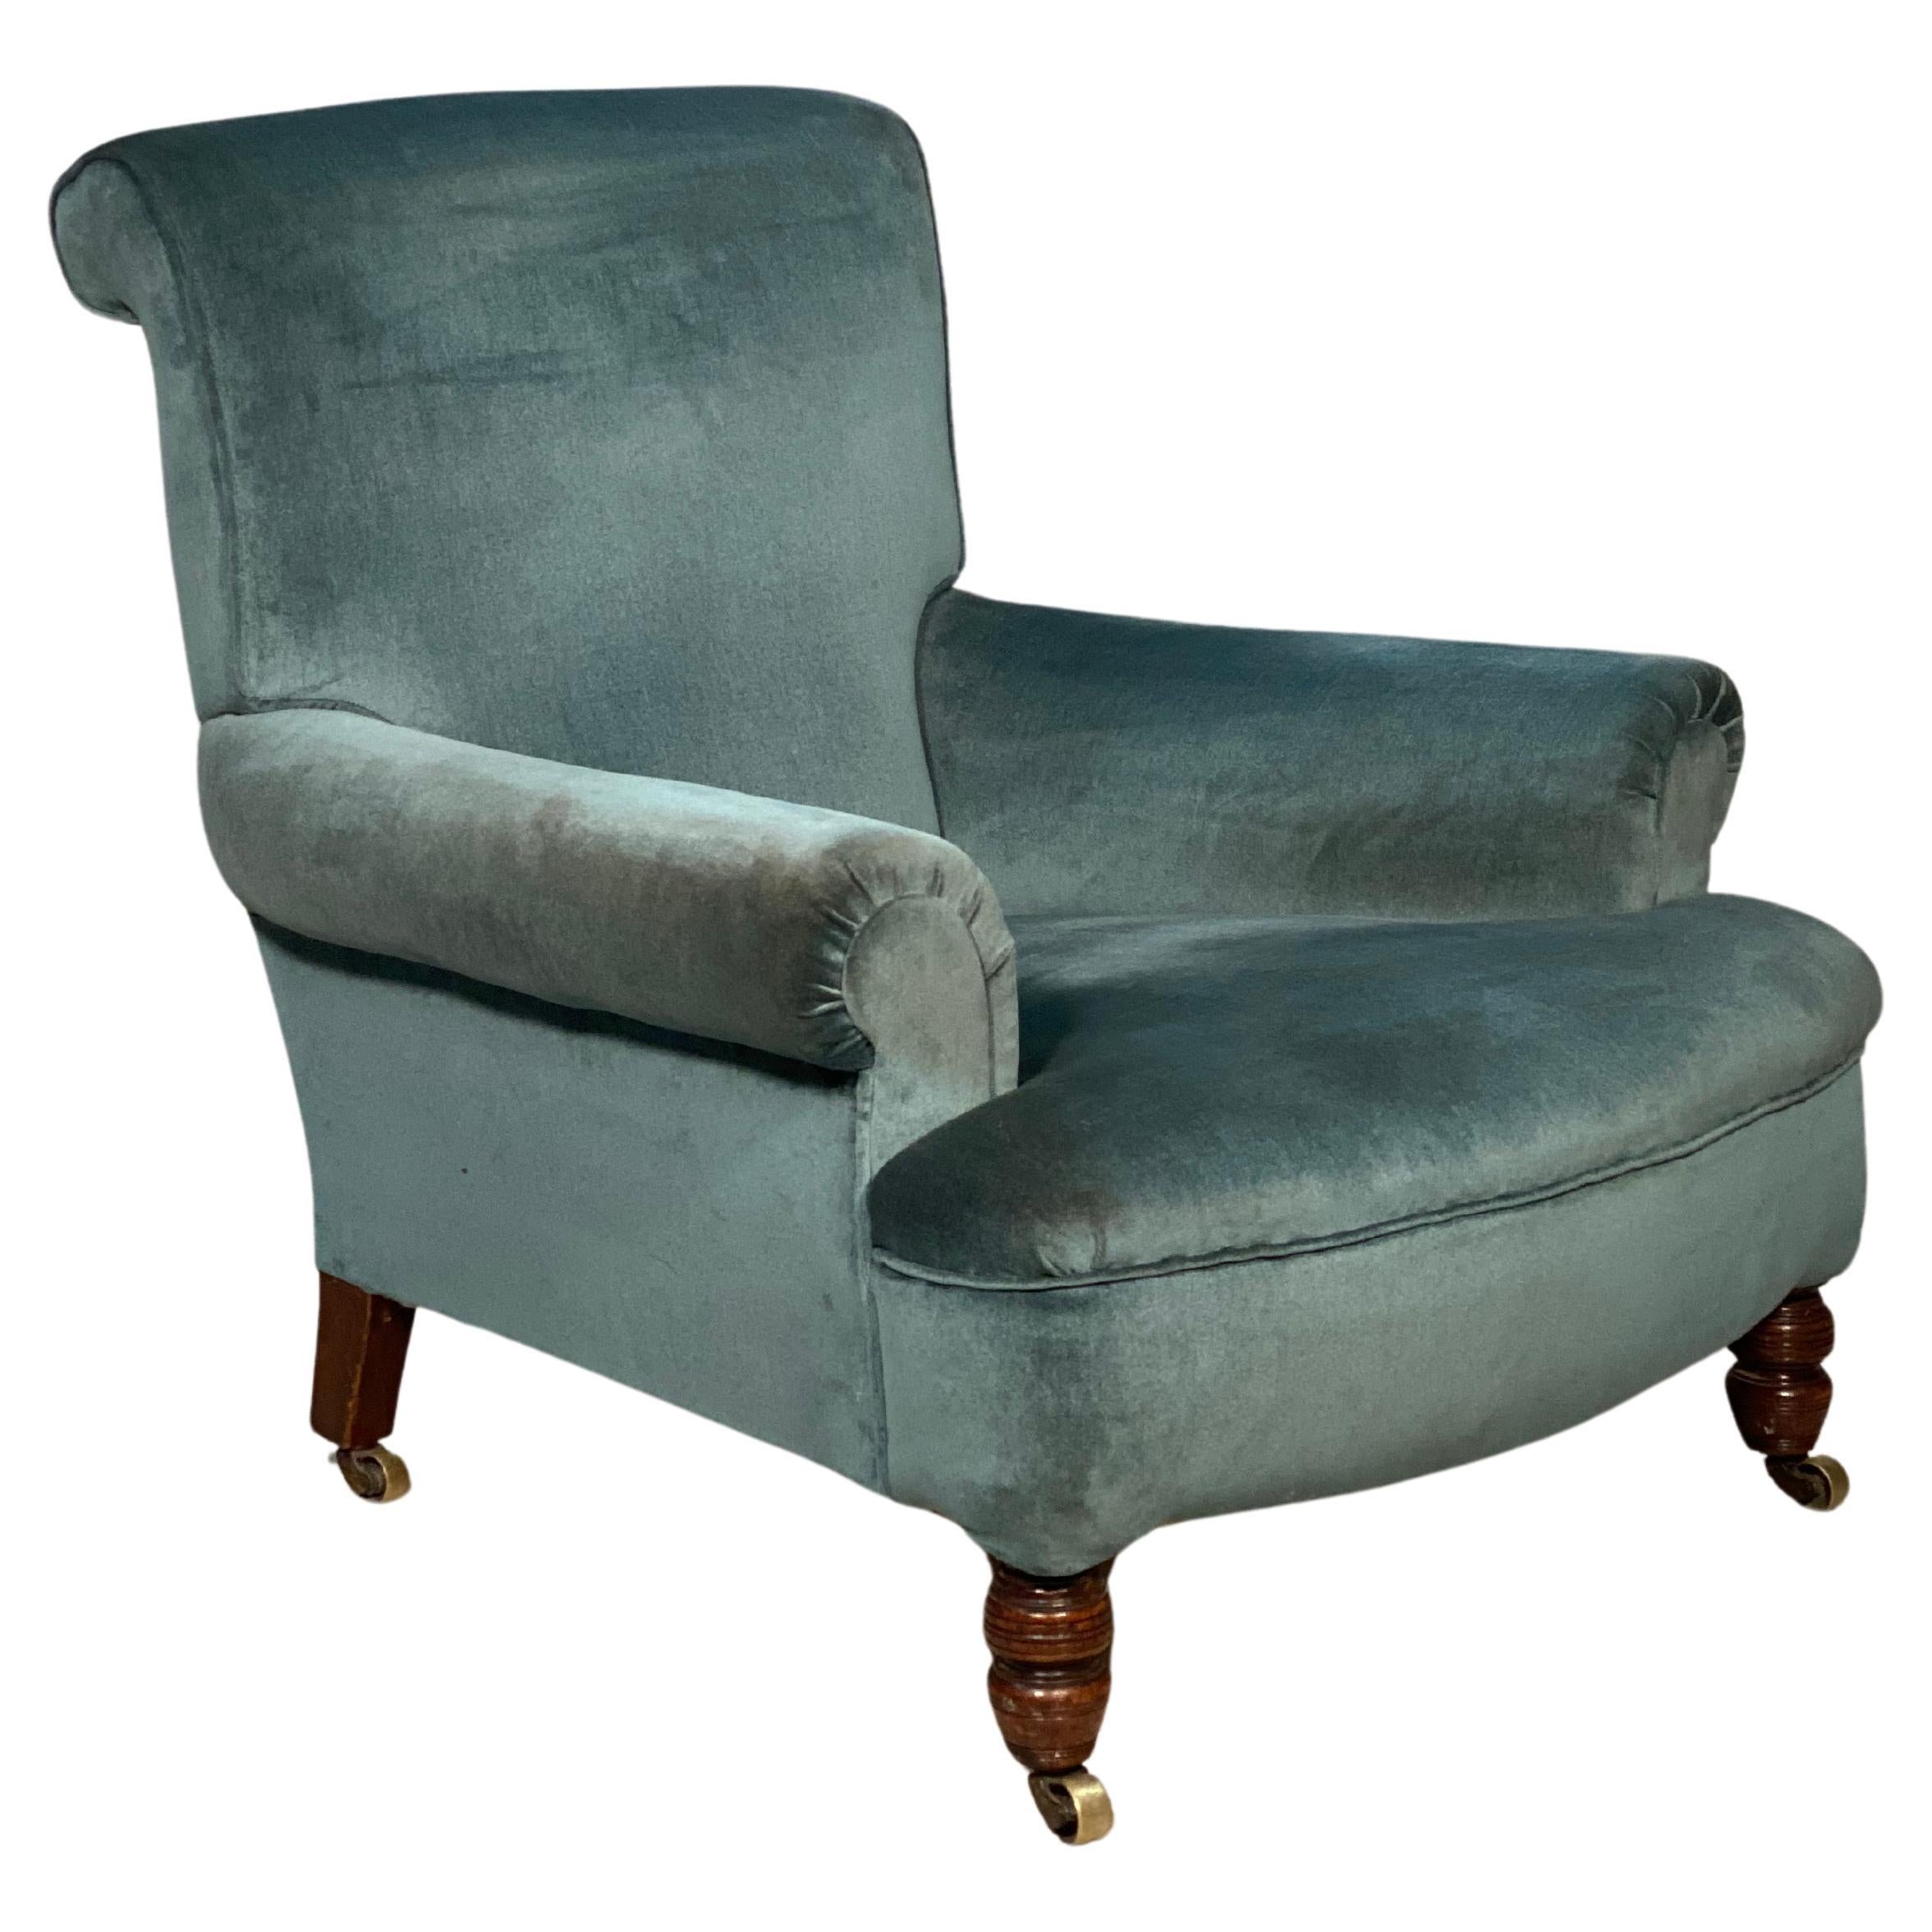 A Deep Seated 19th Century Howard Style Armchair For Sale